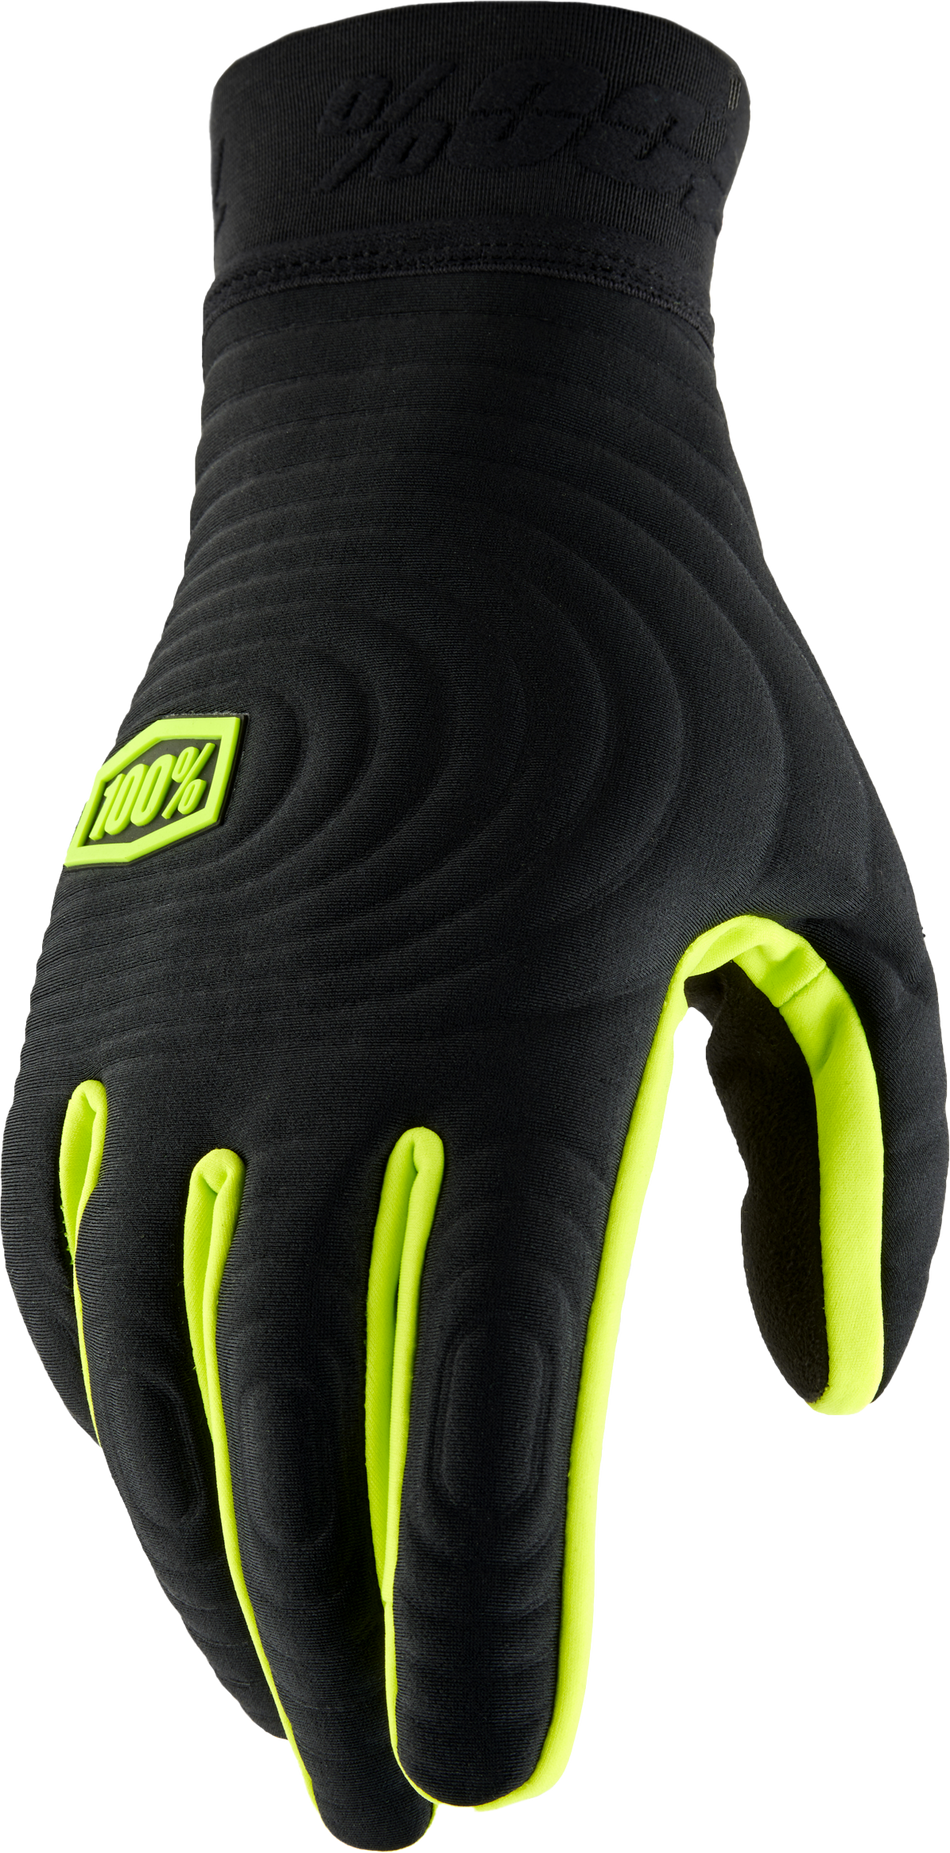 100% Brisker Xtreme Gloves Black/Fluo Yellow Sm 10030-00001